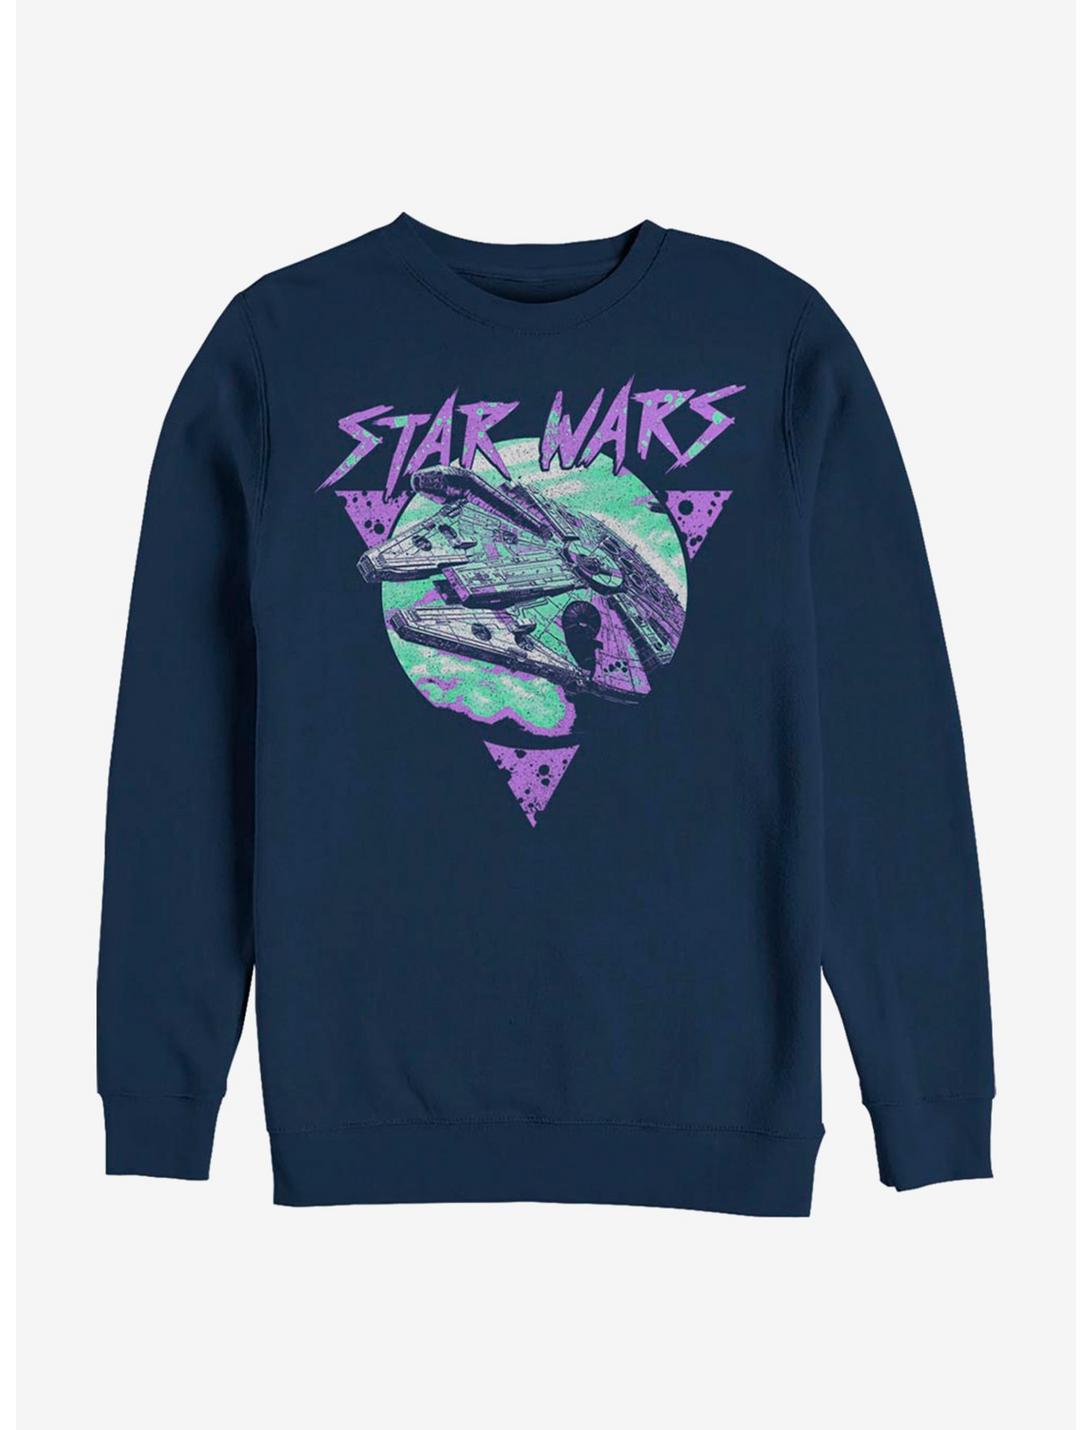 Star Wars New Wave Falcon Sweatshirt, NAVY, hi-res